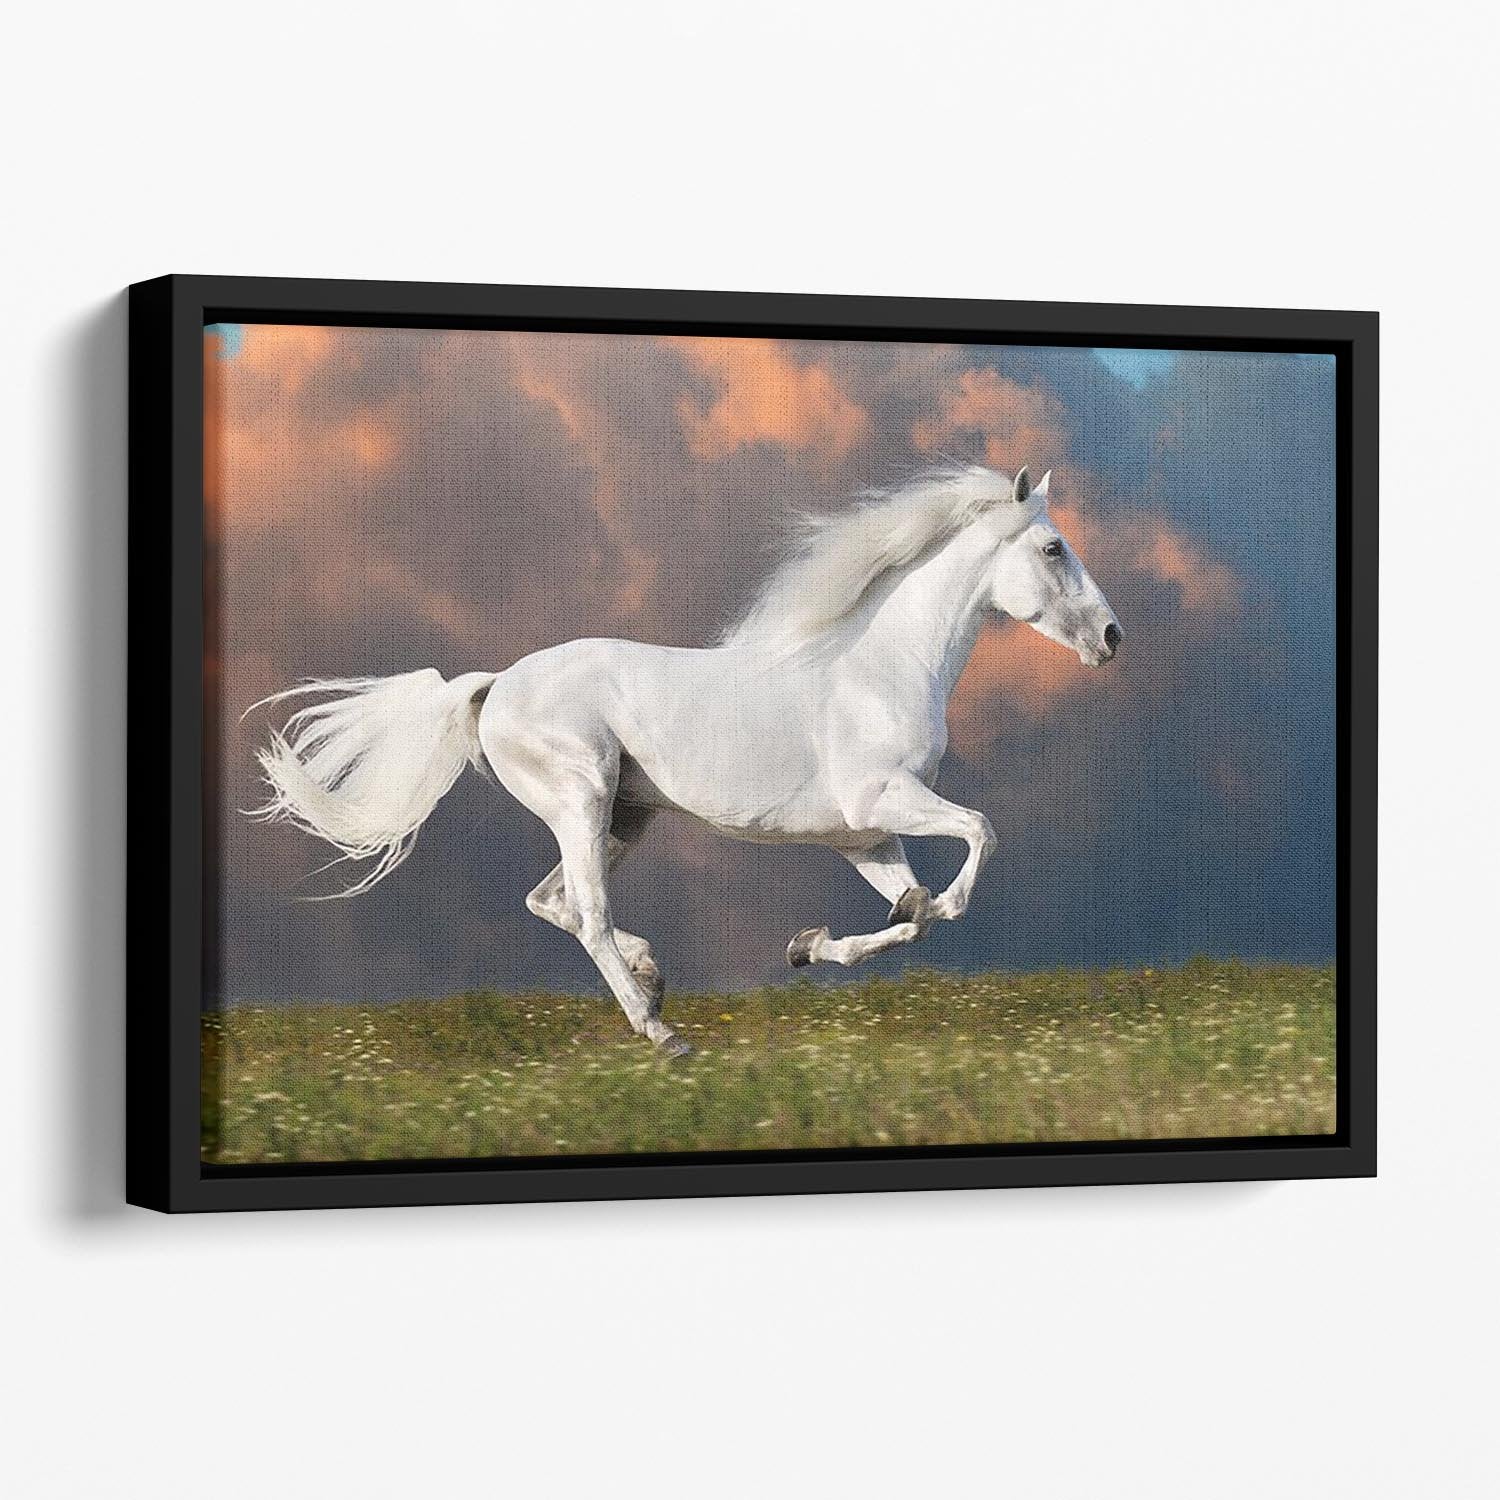 White horse runs gallop on the dark sky Floating Framed Canvas - Canvas Art Rocks - 1